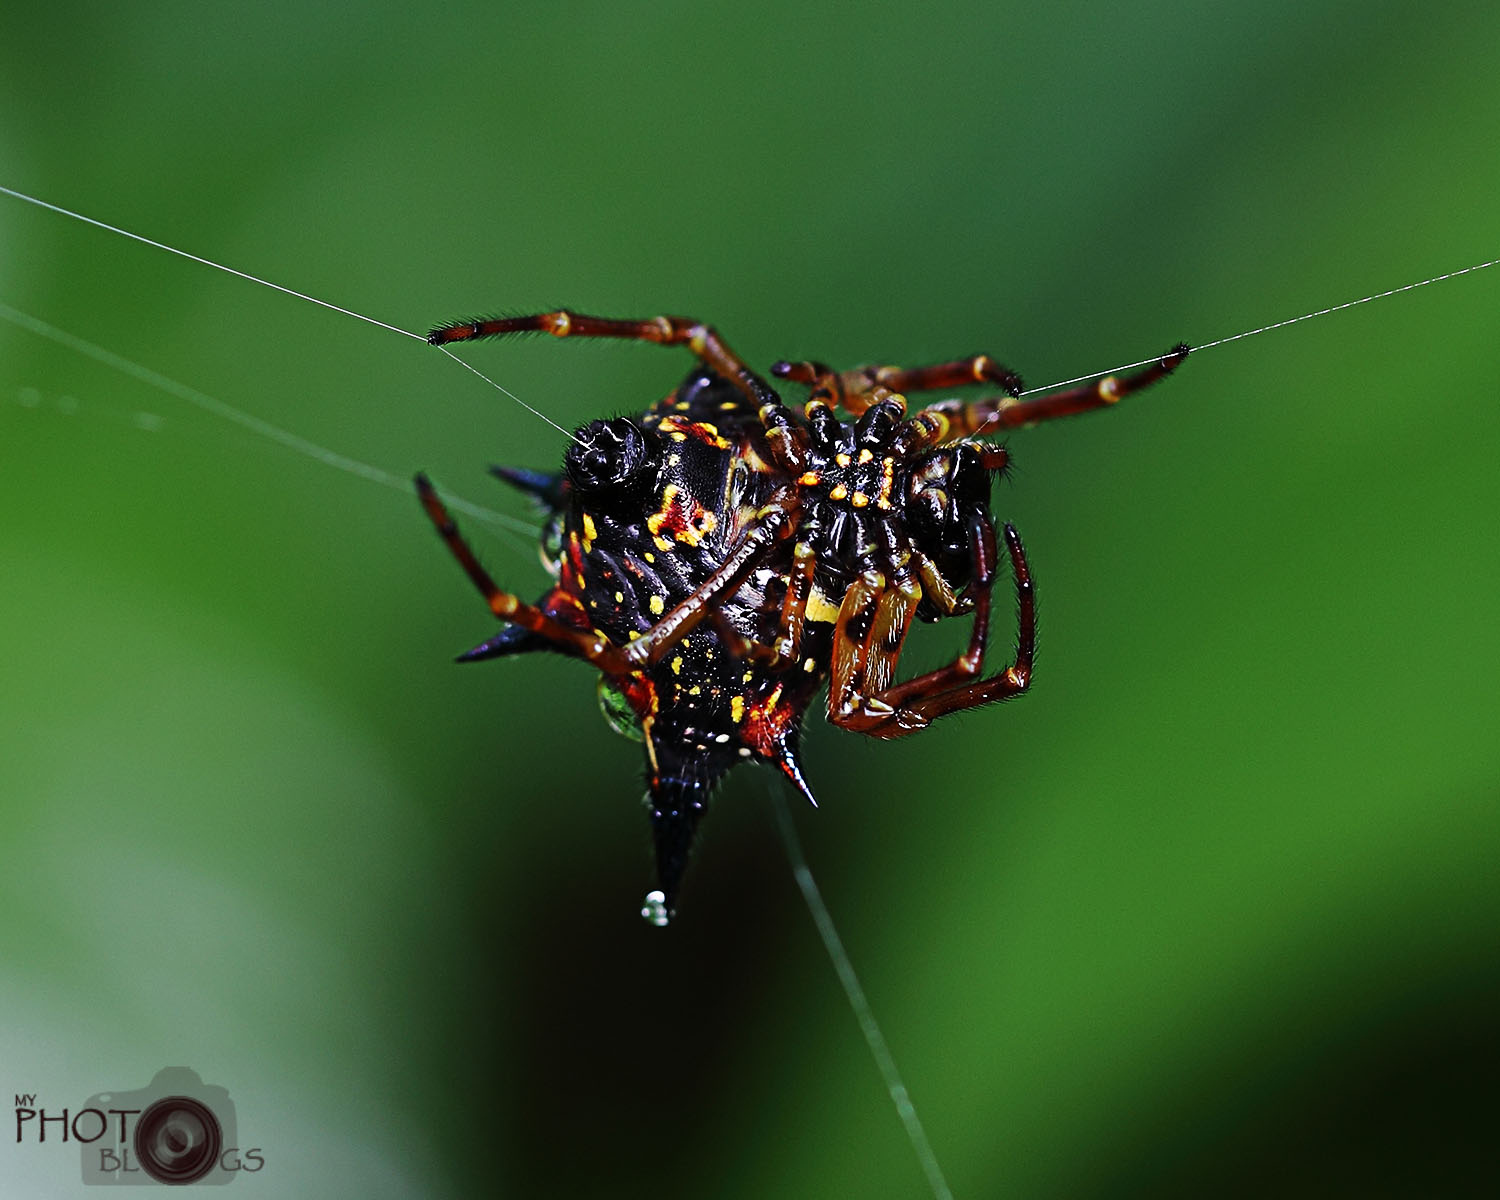 Spine Orb Spider